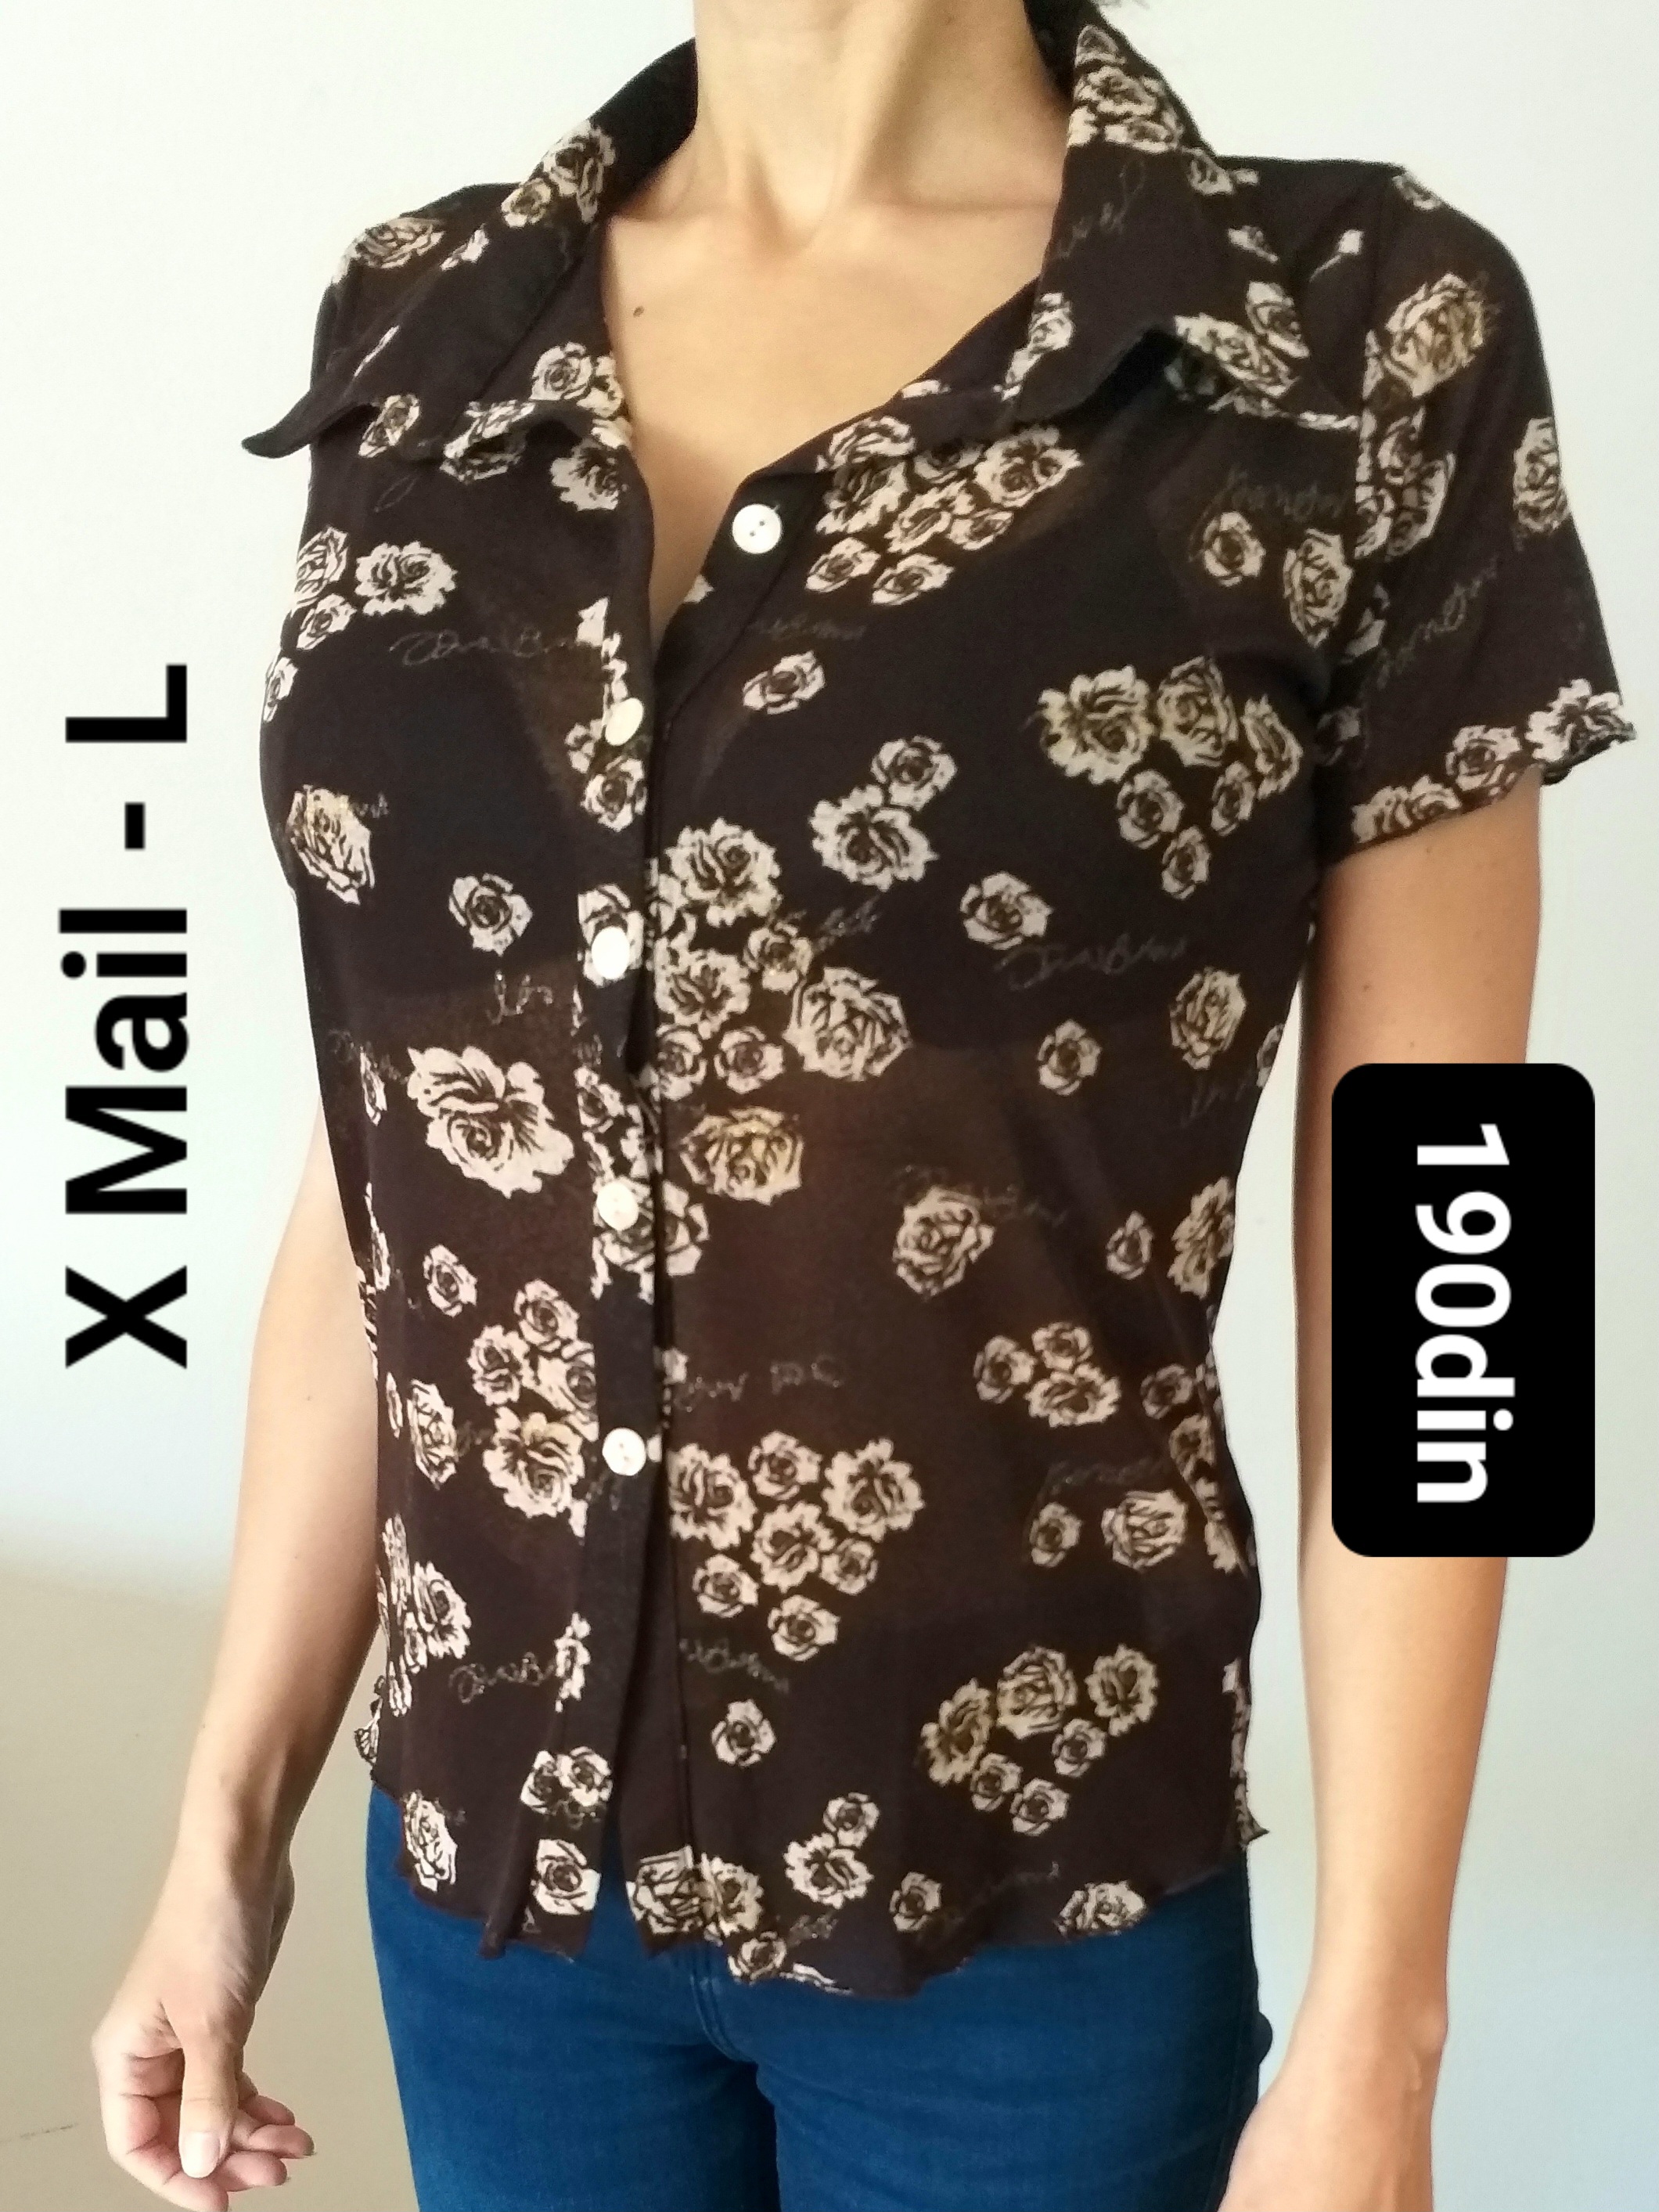 X Mail ženska košulja braon cvetna L/40